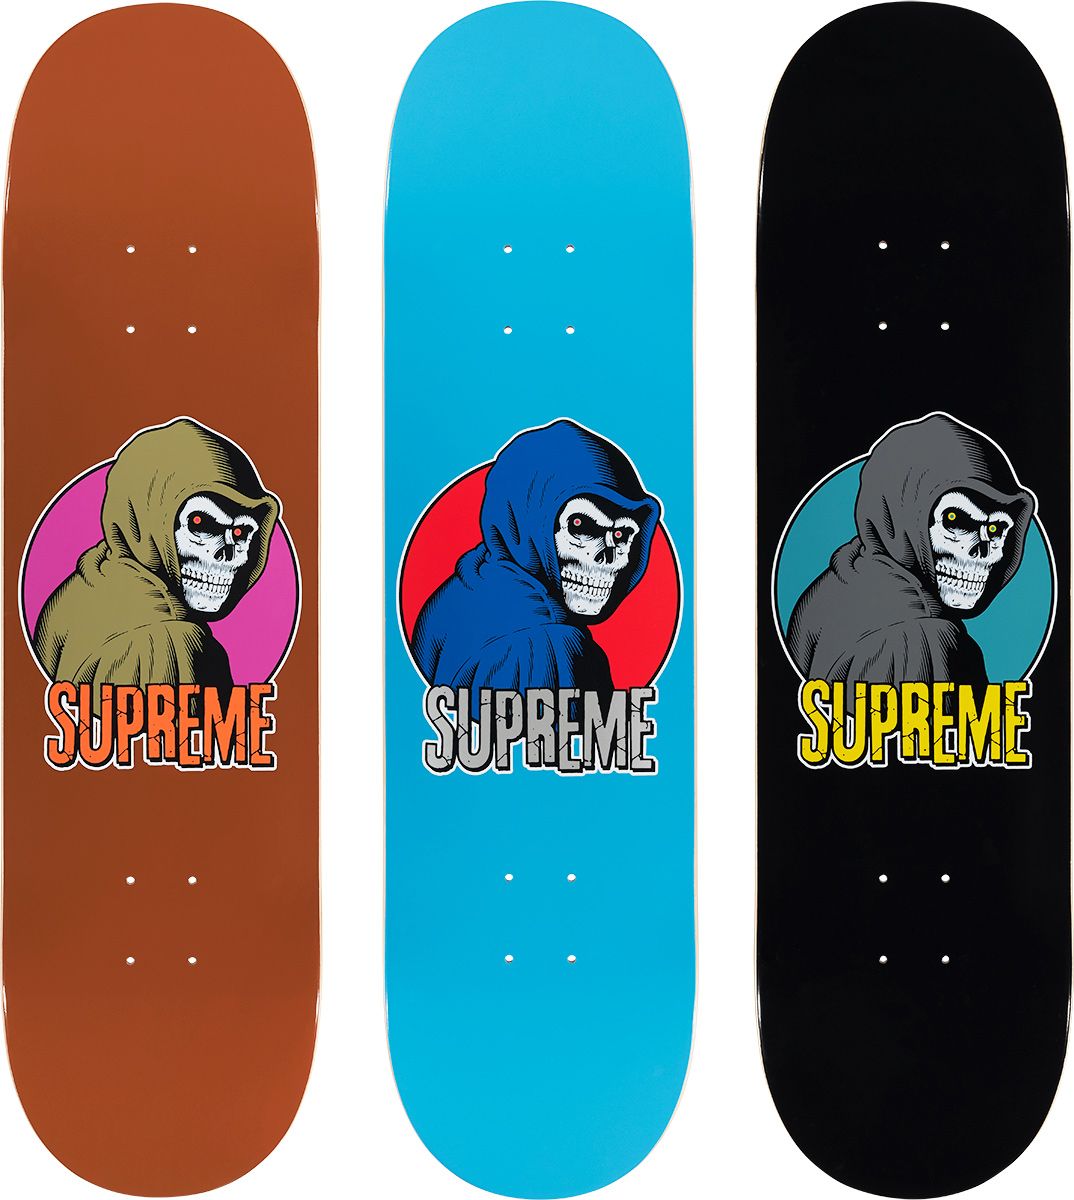 Supreme®/Hoto 5-Piece Tool Set - Spring/Summer 2023 Preview – Supreme